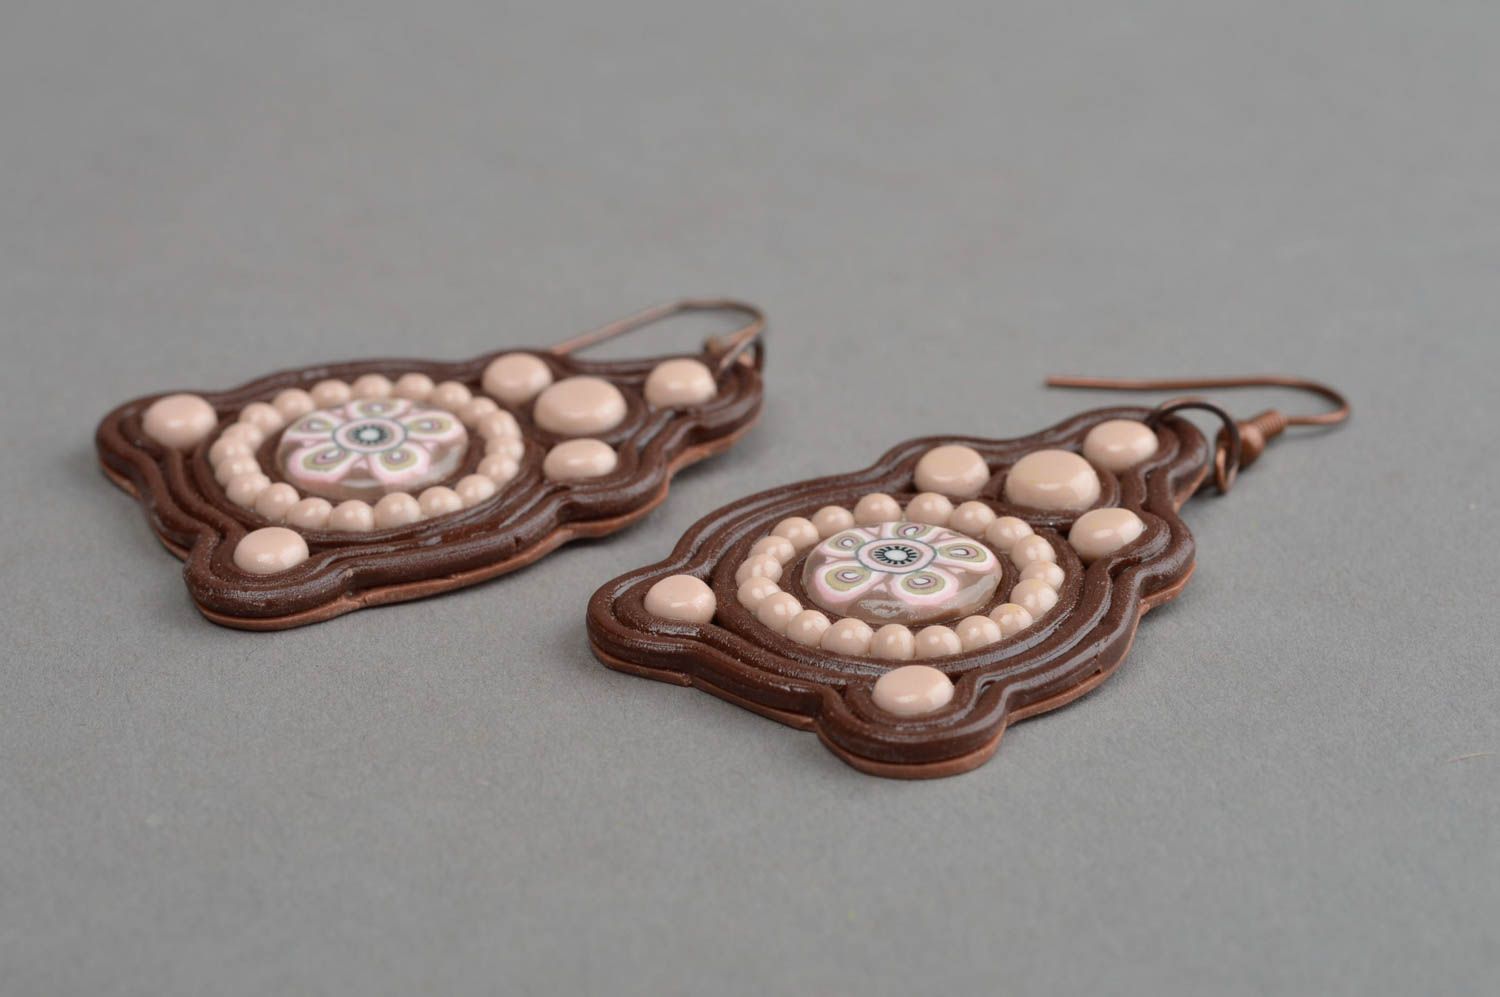 Handmade earrings with charms polymer clay earrings soutache earrings for women photo 3